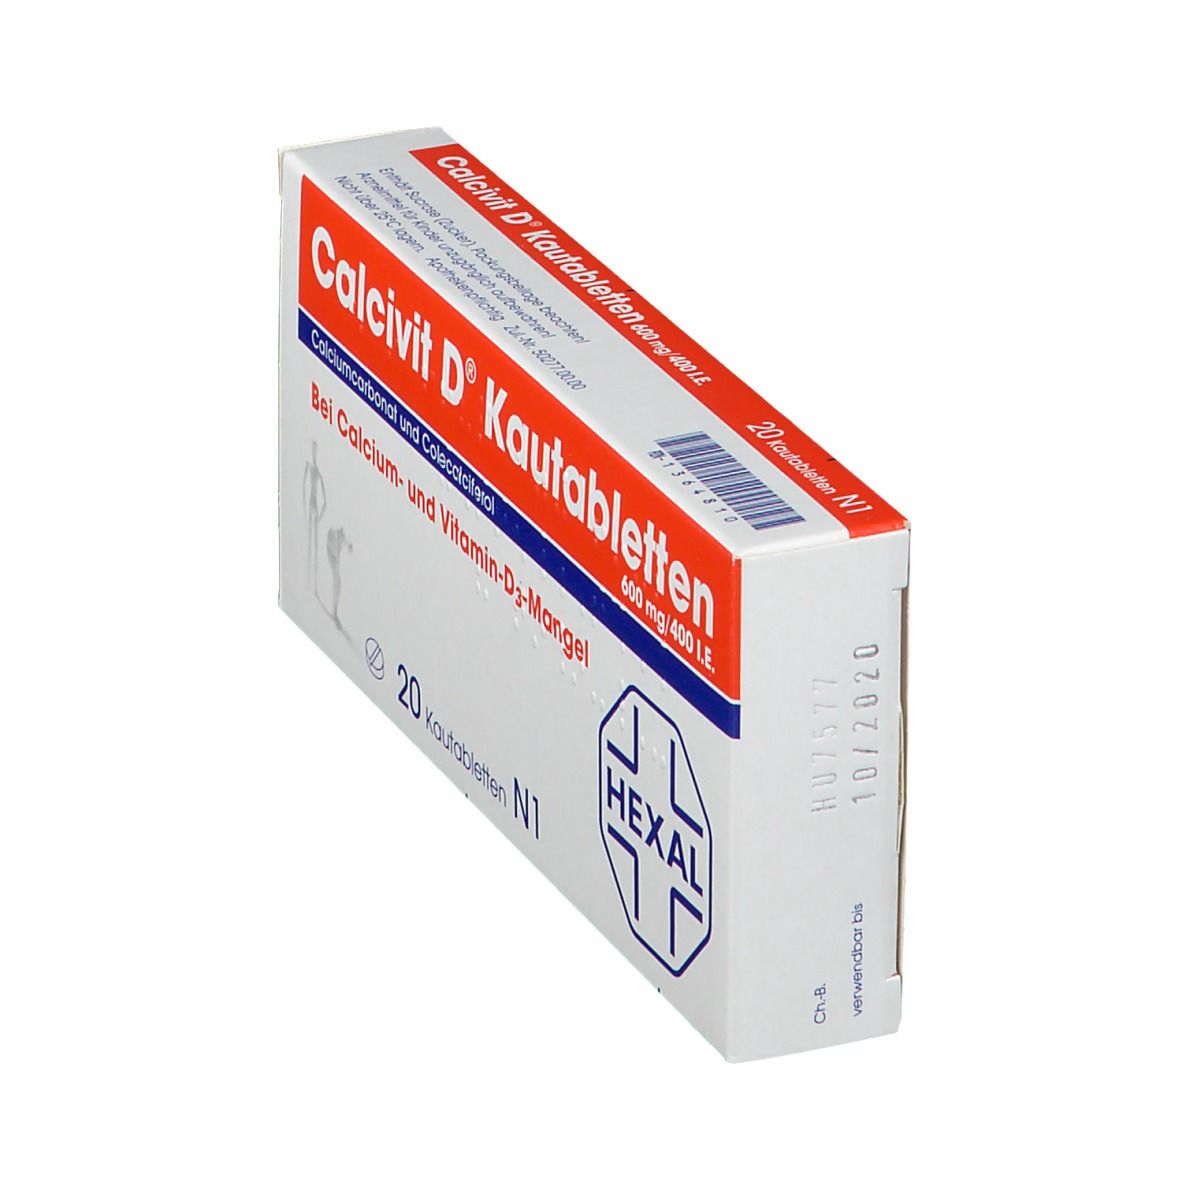 Calcivit D® Kautabletten, 600 mg/400 I.E.